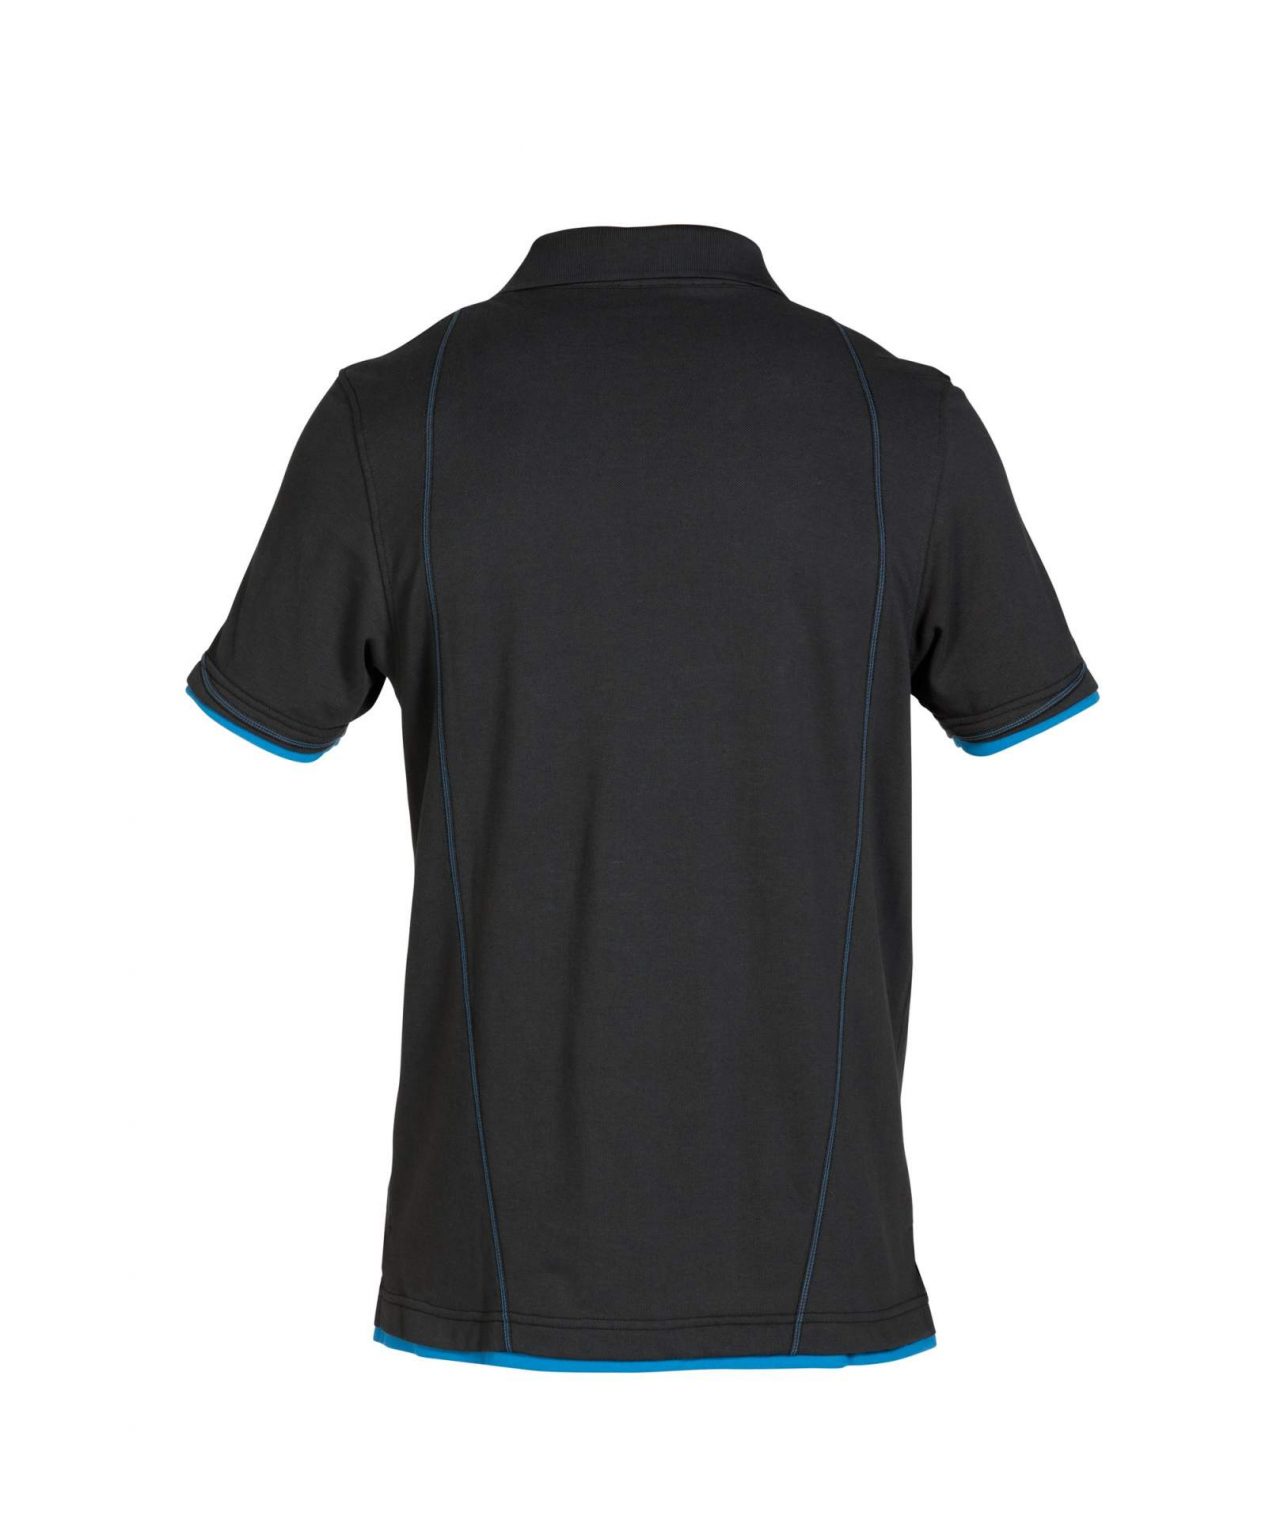 orbital polo shirt black azure blue back